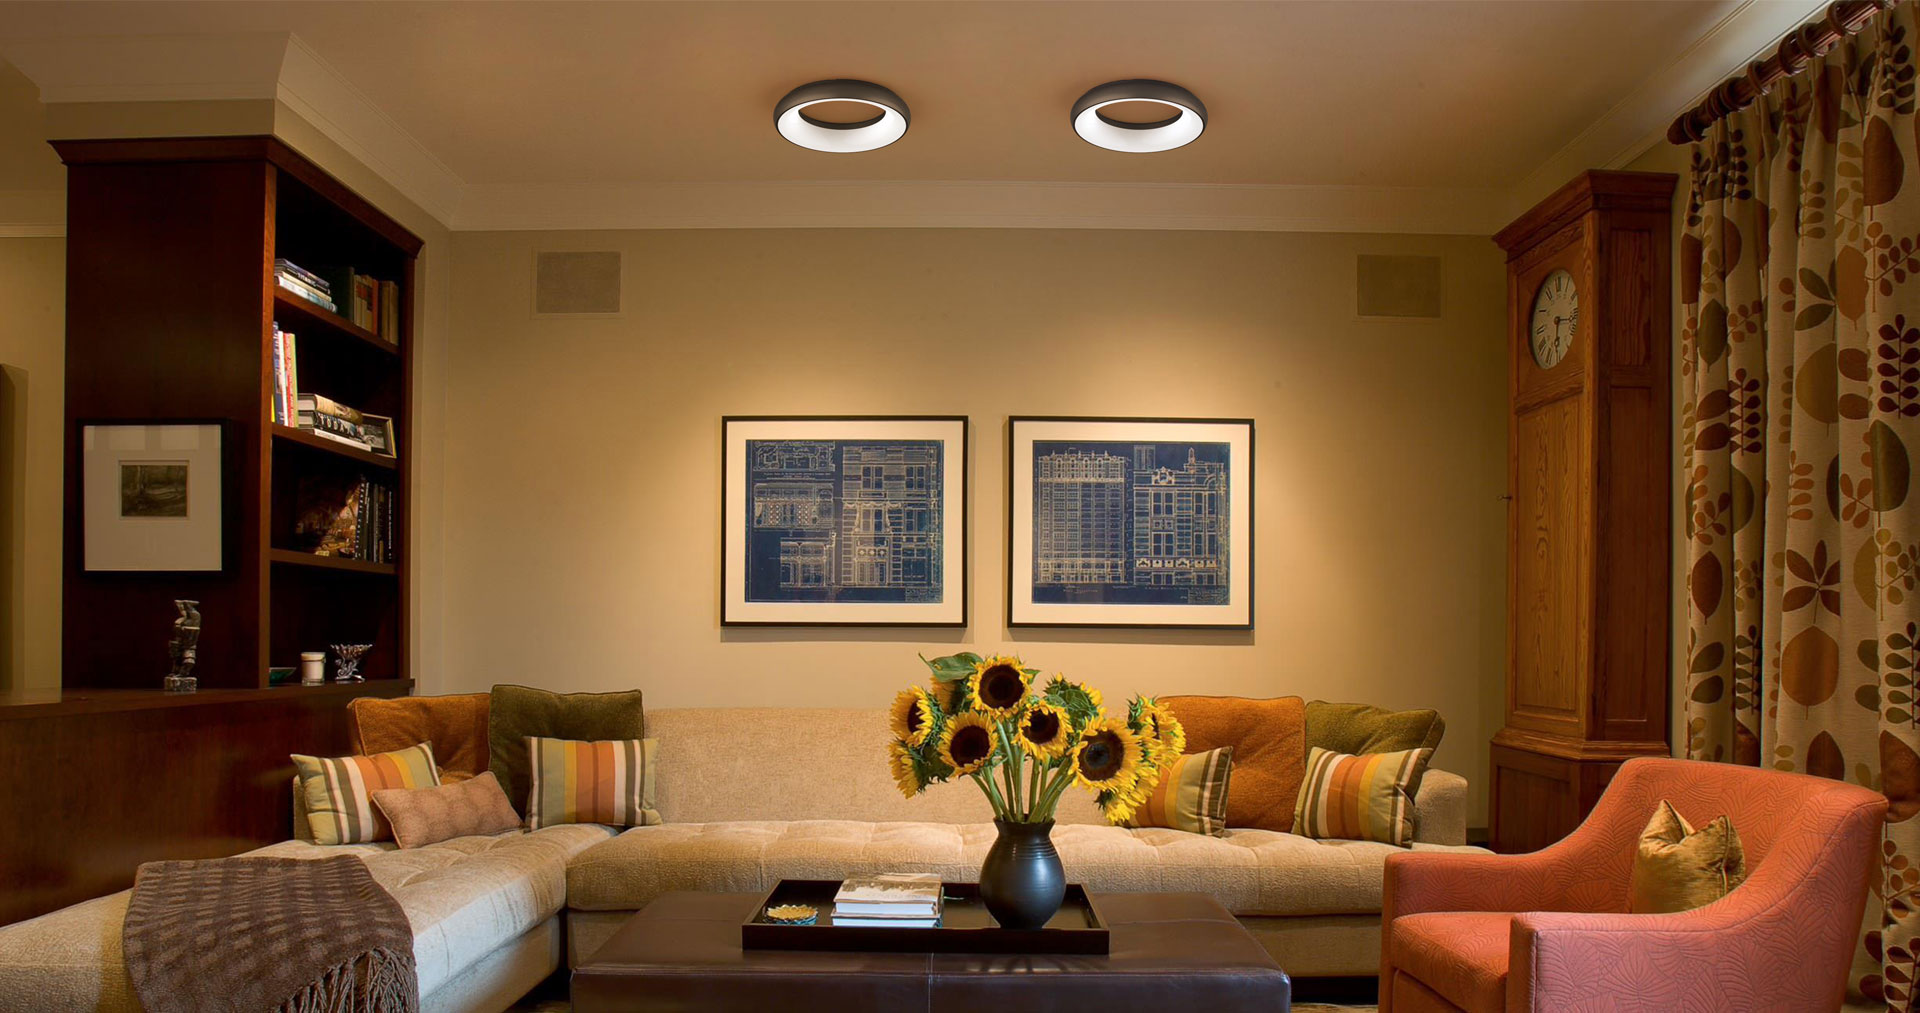 Led Ceiling Lights For Living Room Mountain Theme